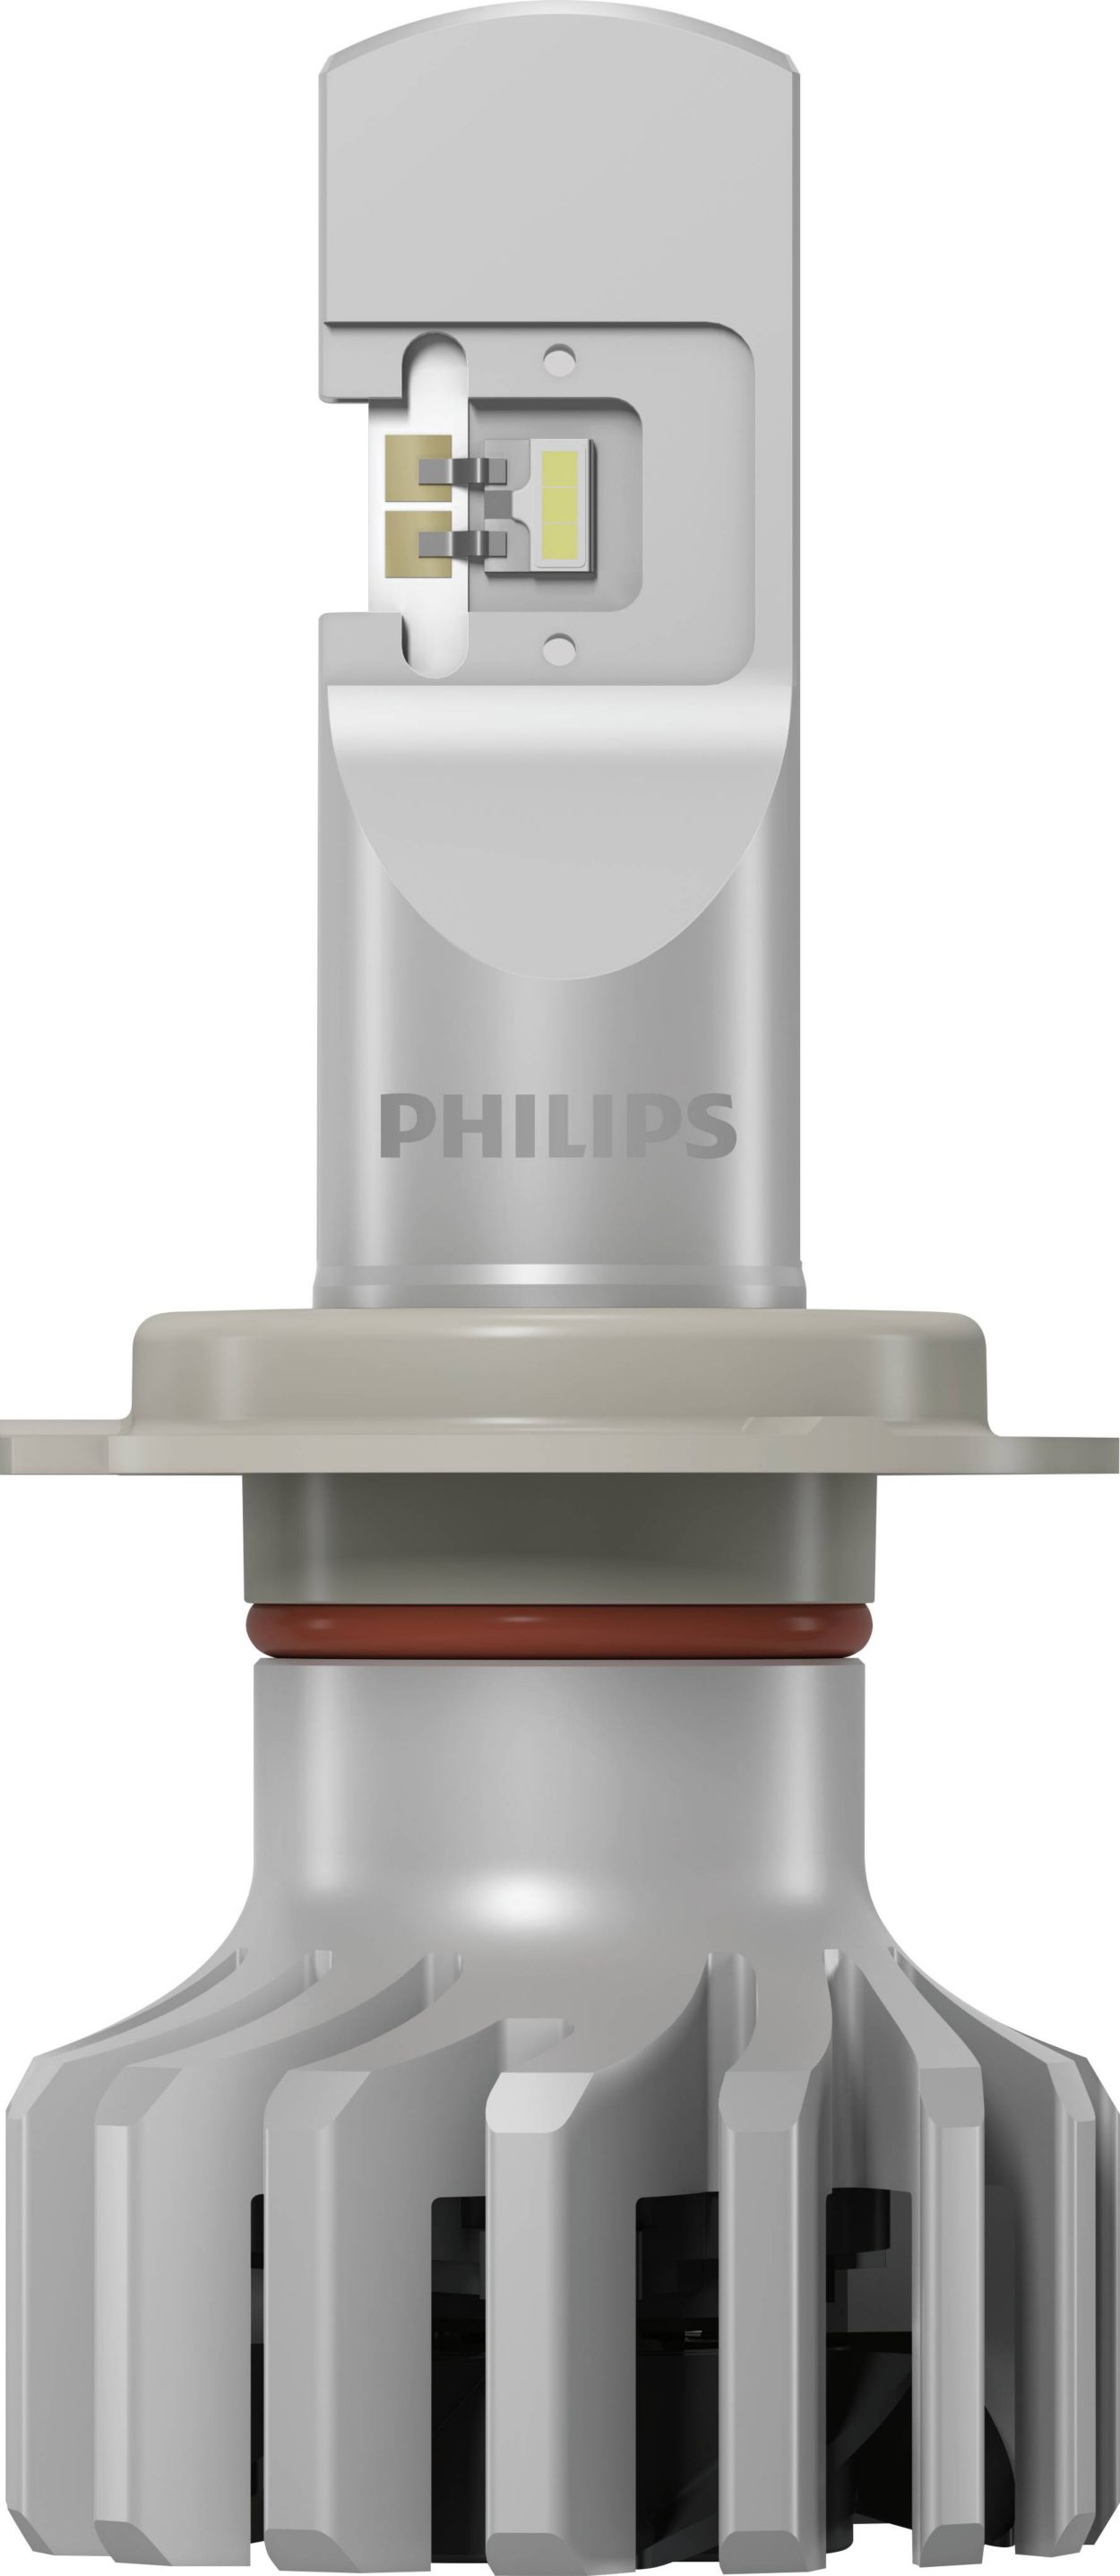 Bombillas Bi-LED Homologadas* H4 Pro6001 Ultinon Philips 11342U6001X2 5800K  +230% - France-Xenon